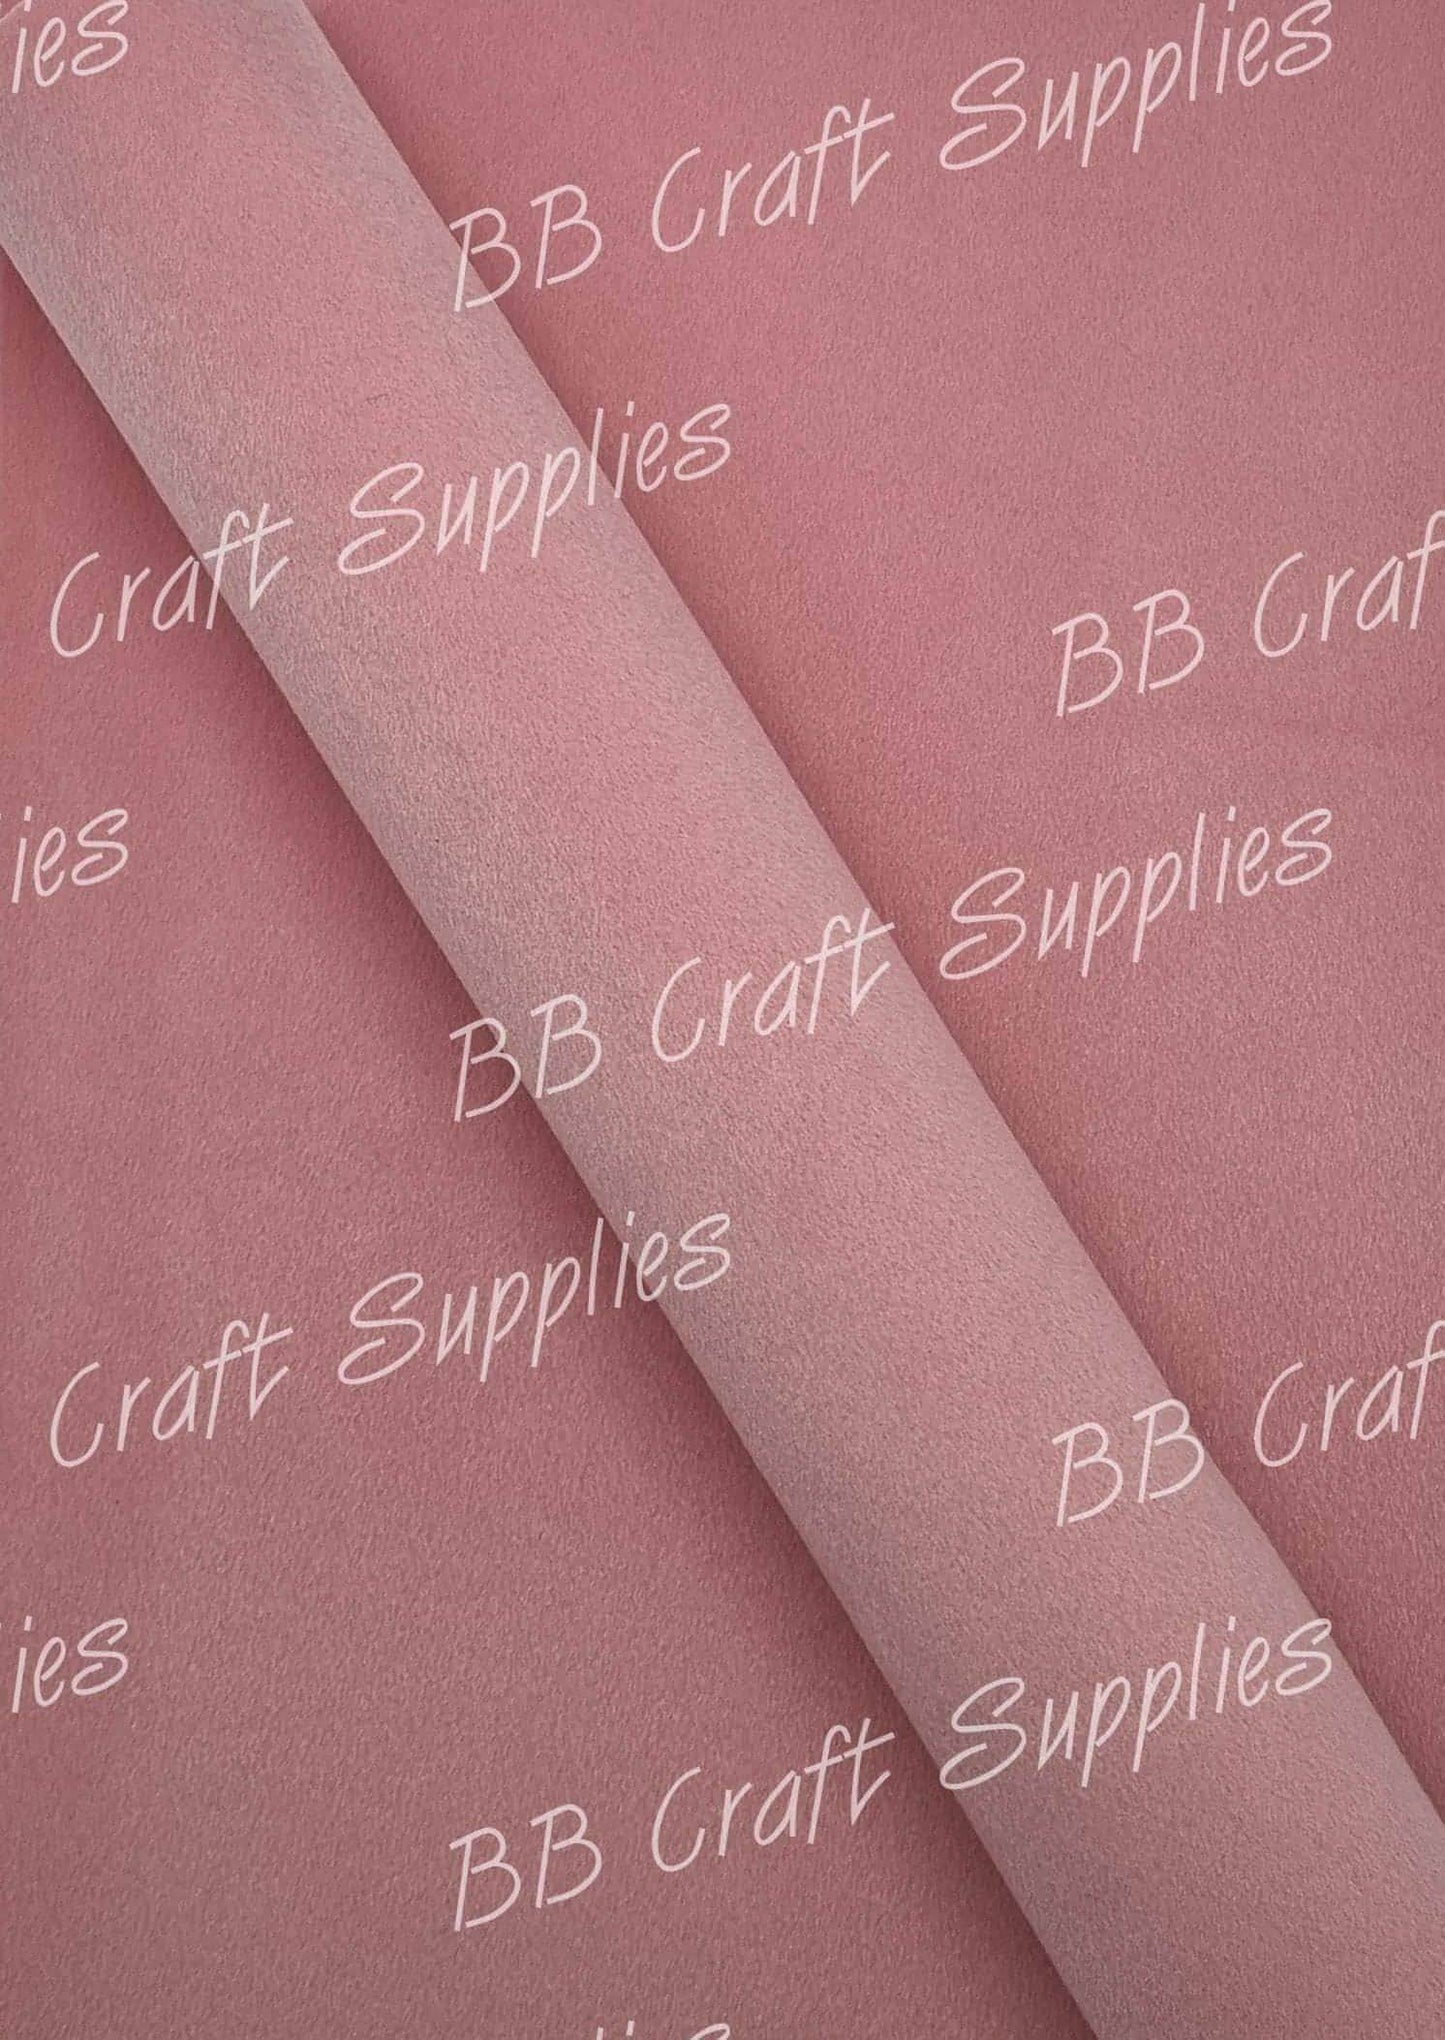 Premium Velvet Fabric - Pink - crushed, soft, velvet - Bare Butler Faux Leather Supplies 